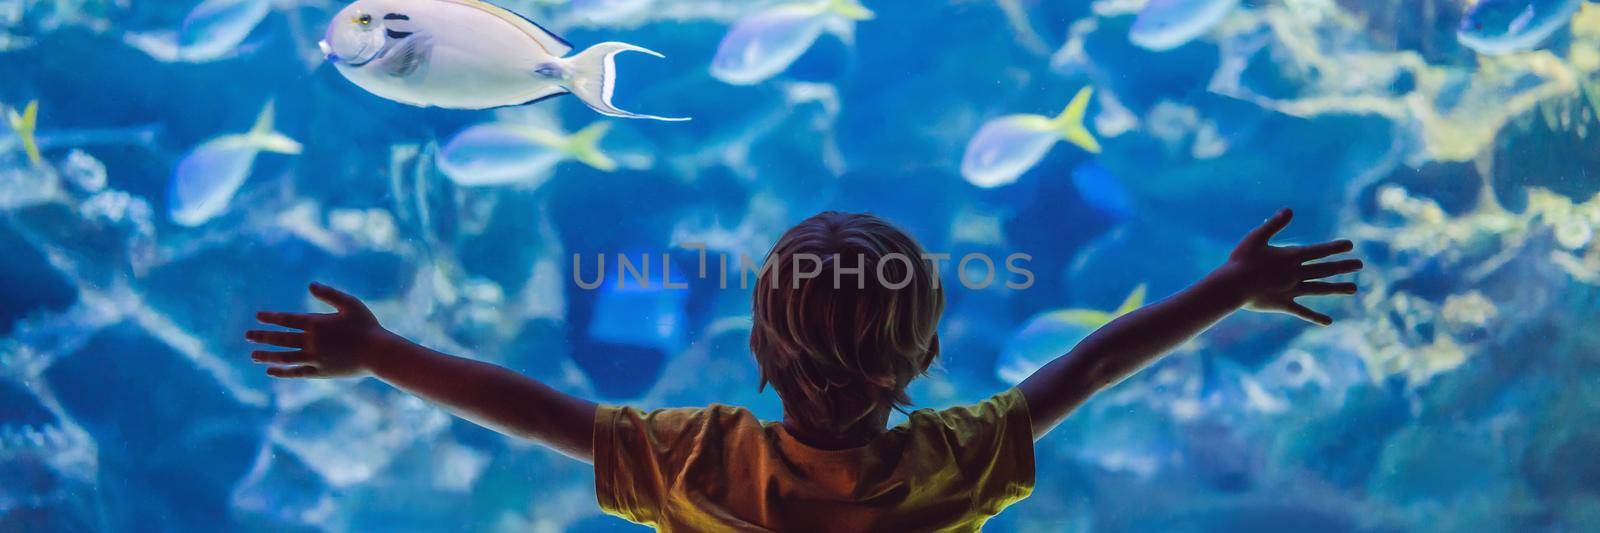 Little boy, kid watching the shoal of fish swimming in oceanarium, children enjoying underwater life in Aquarium. BANNER, LONG FORMAT